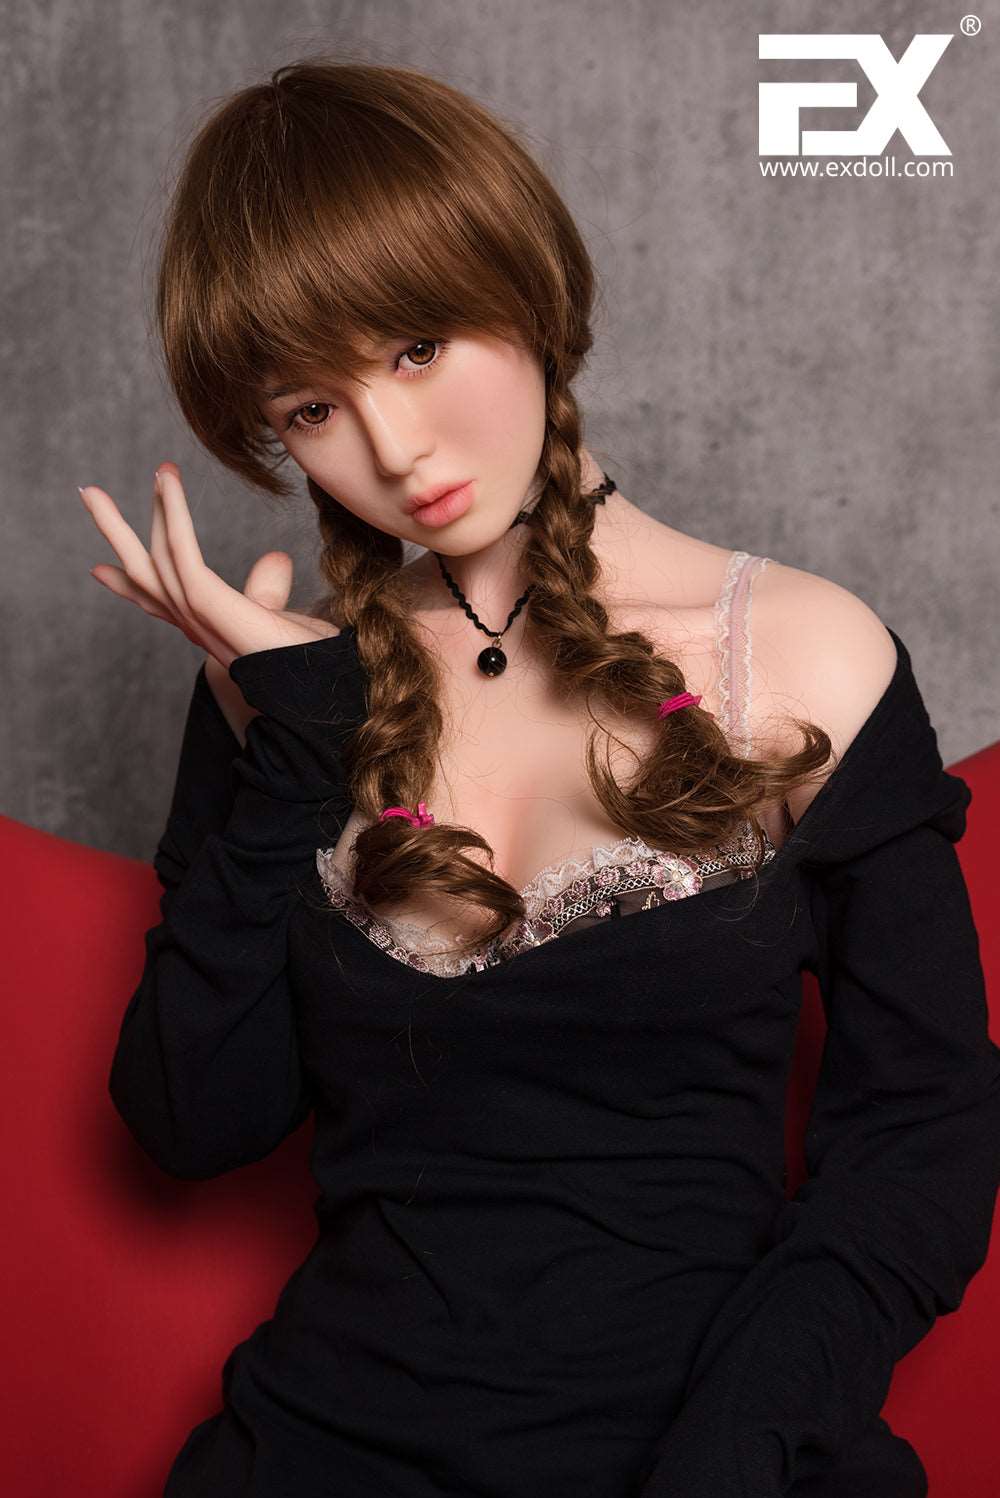 EX Doll Ukiyoe Series 170 cm Silicone - Hatsuha | Sex Dolls SG